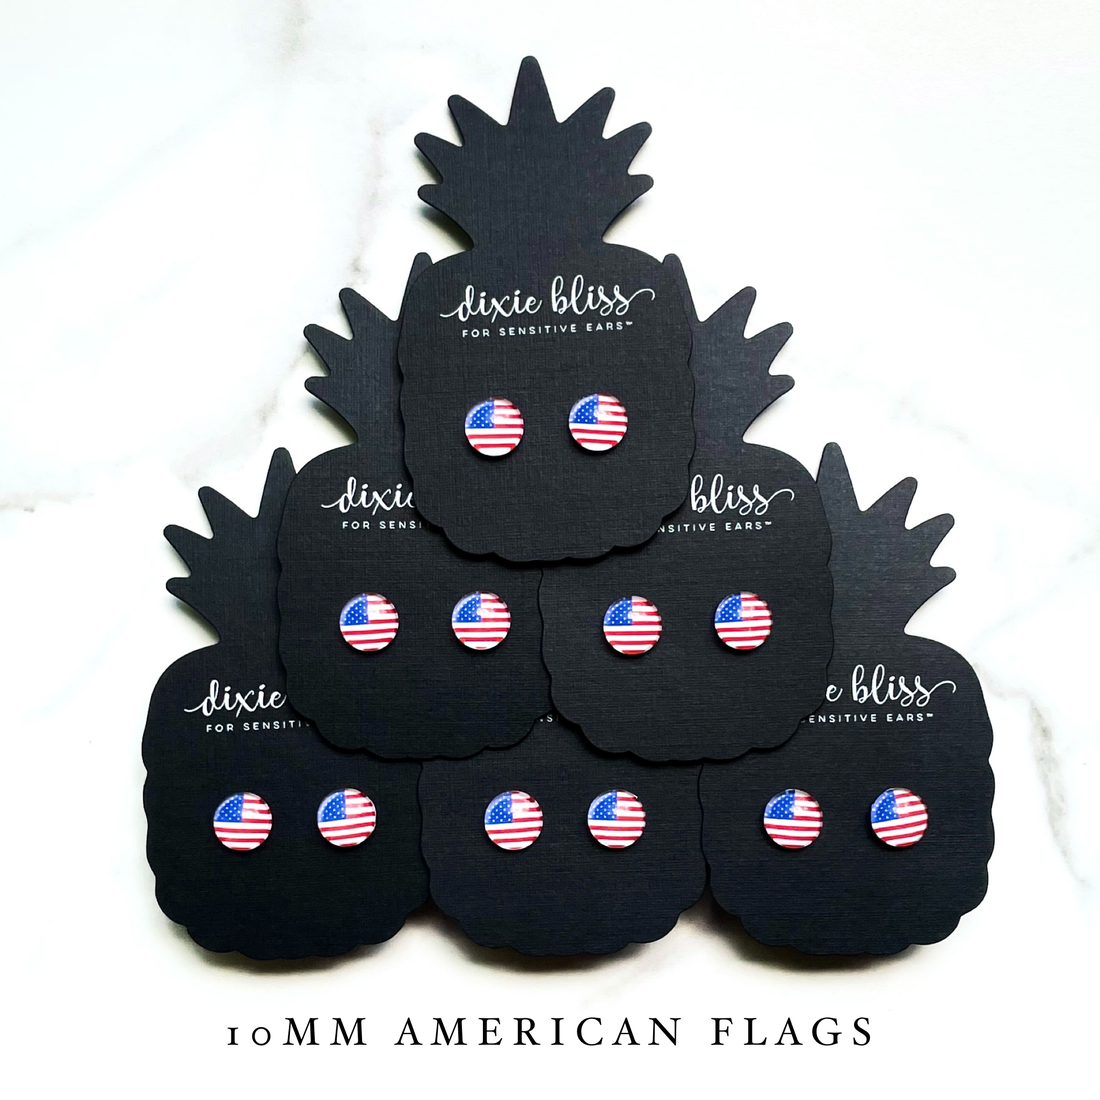 Dixie Bliss Earrings: USA Flags 10mm